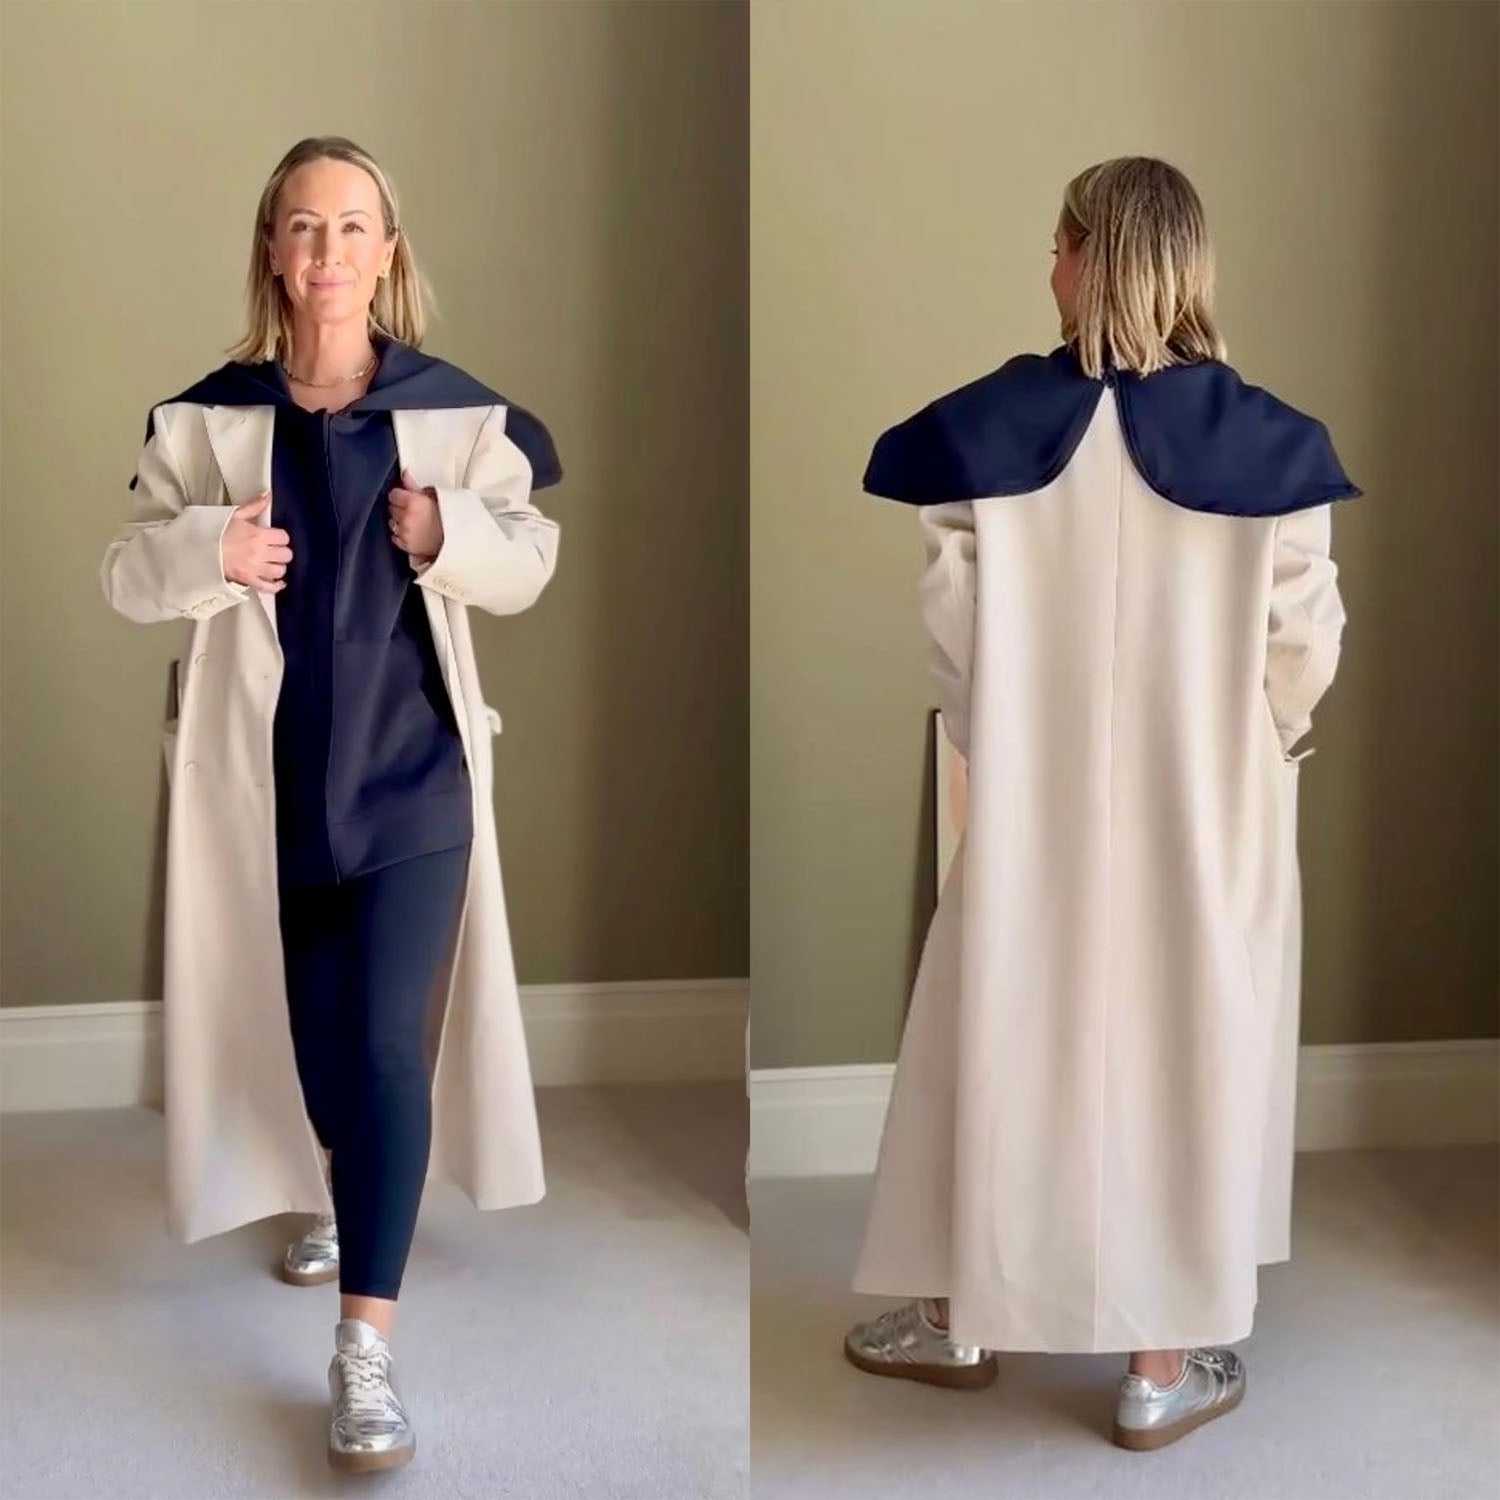 Neoprene hoodies style by Sarah Battle